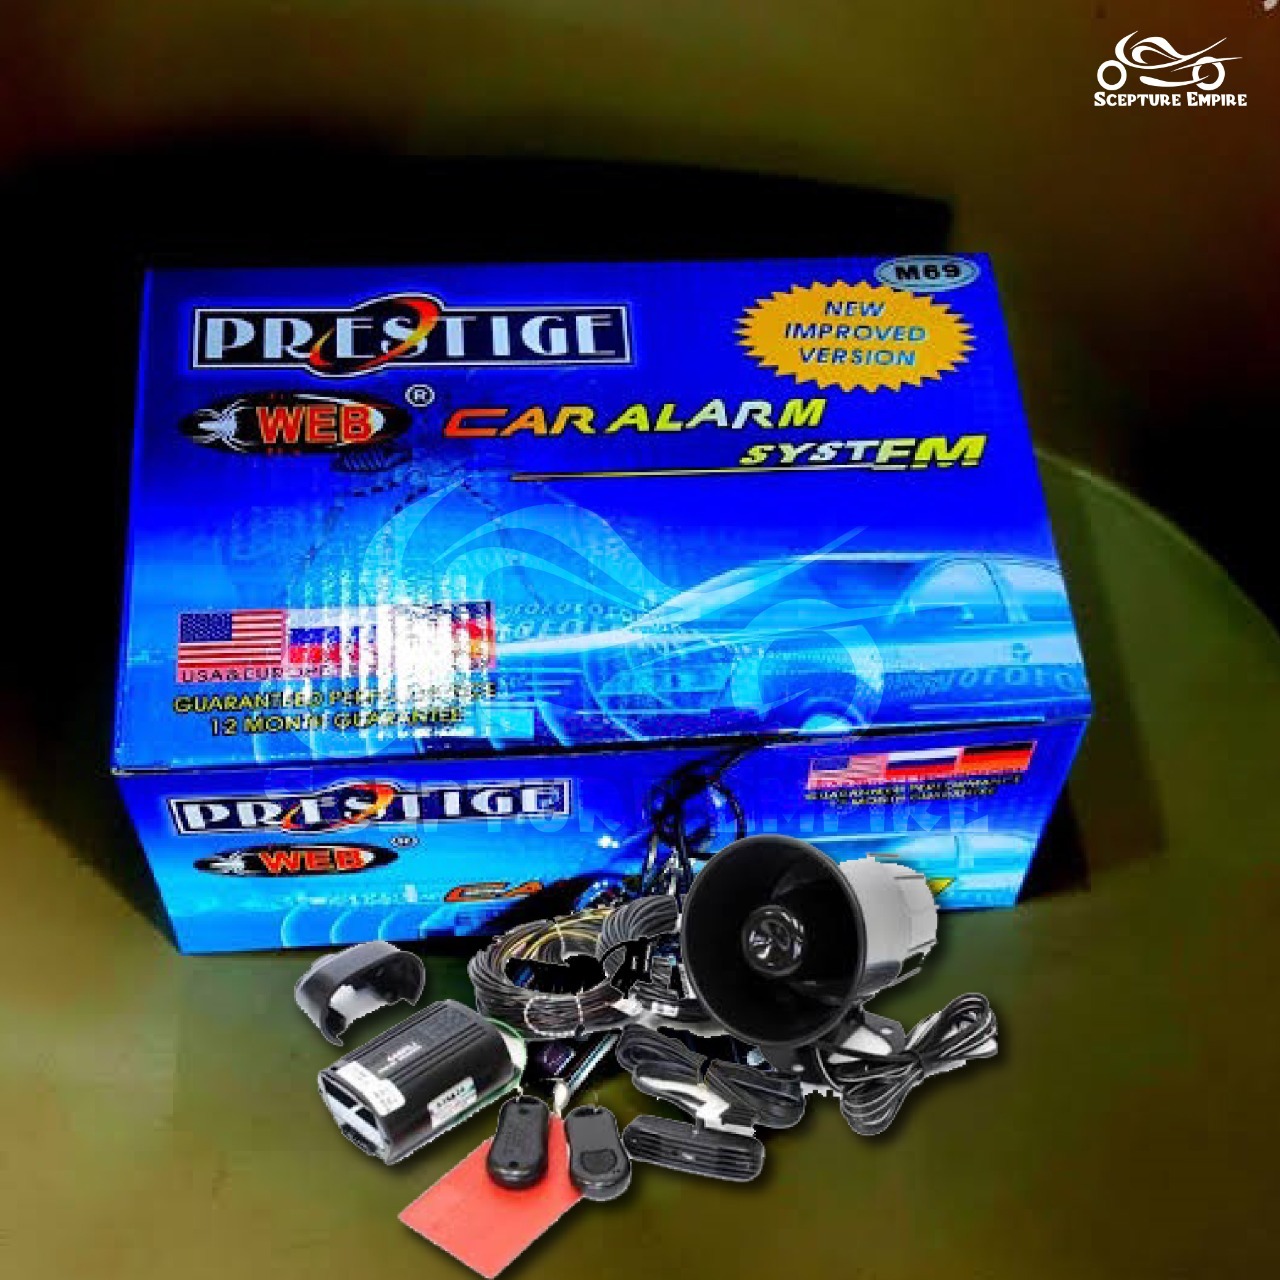 Prestige web car alarm system